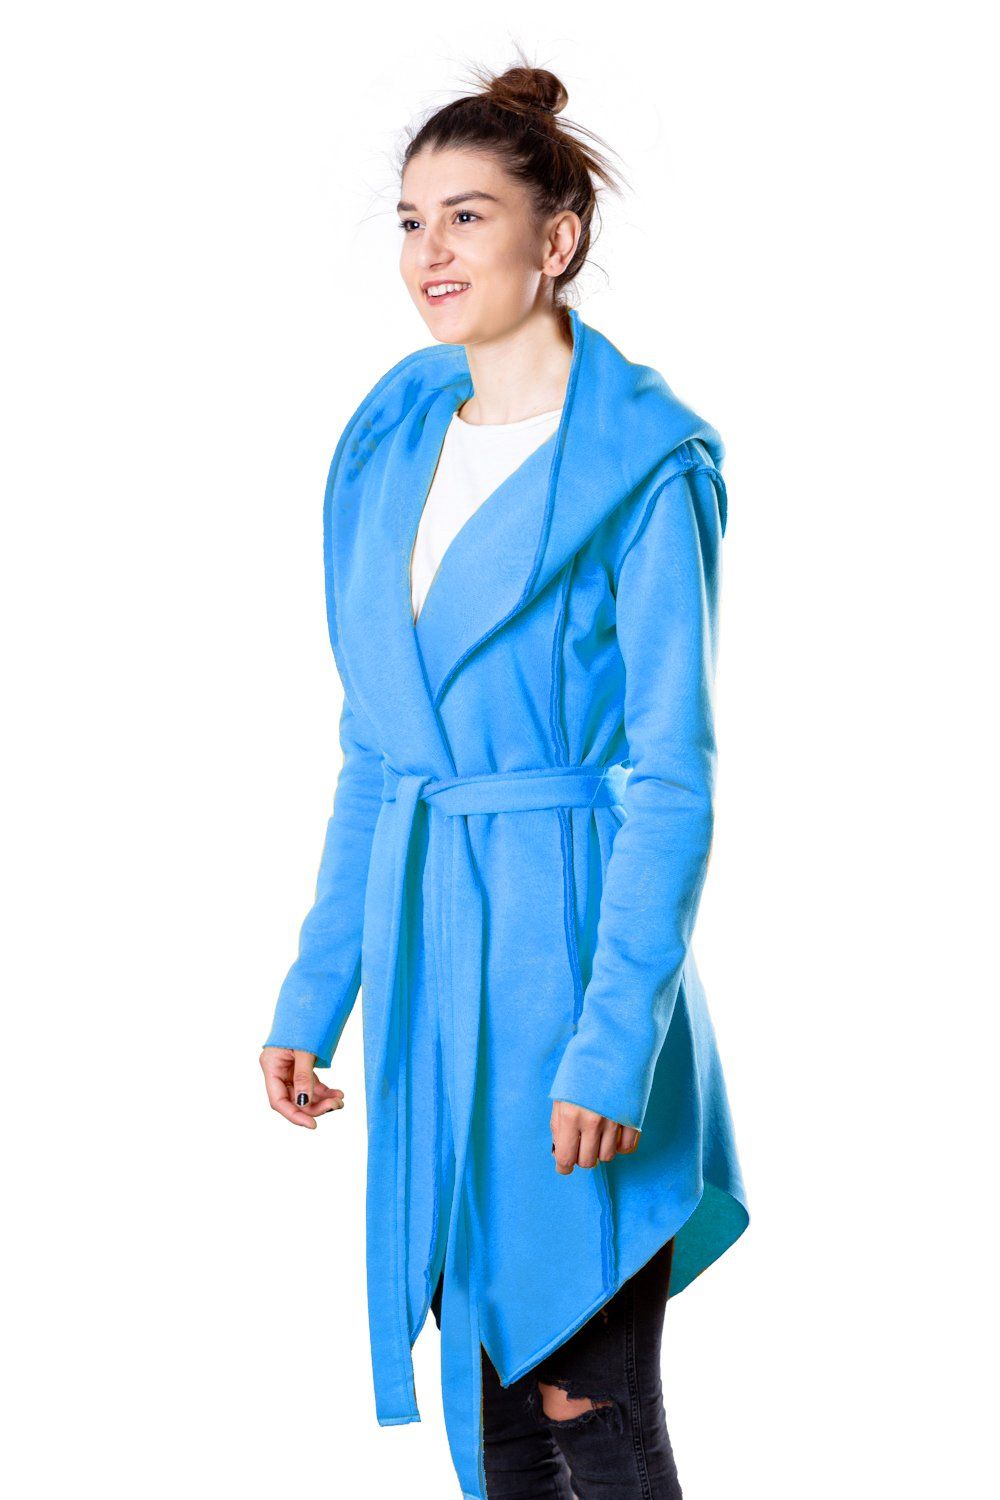 TheG Woman Designer Cardigan 2.0 // blue